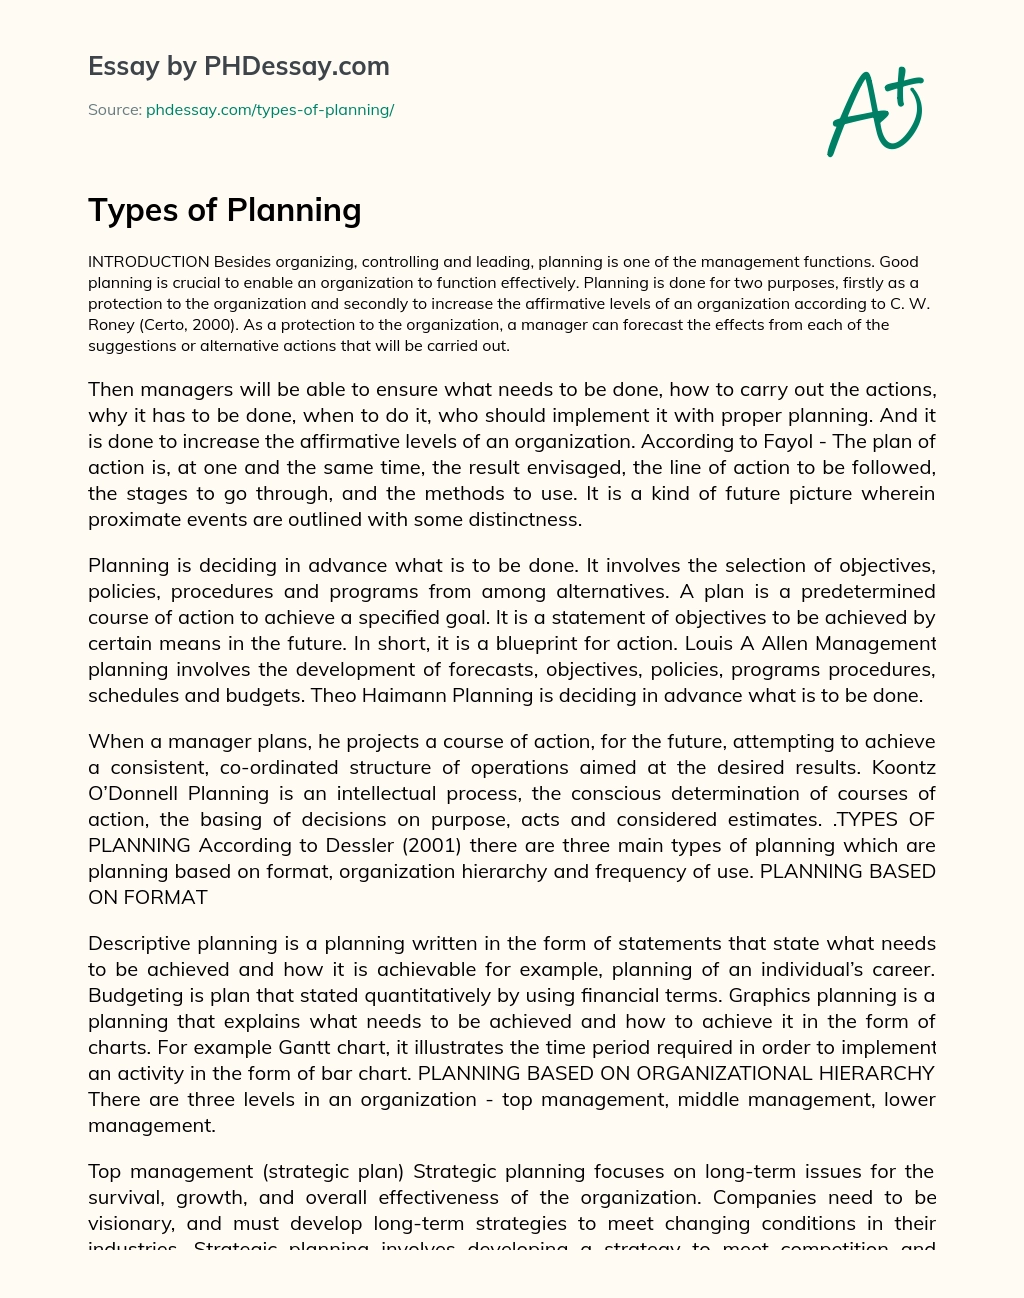 Types of Planning essay